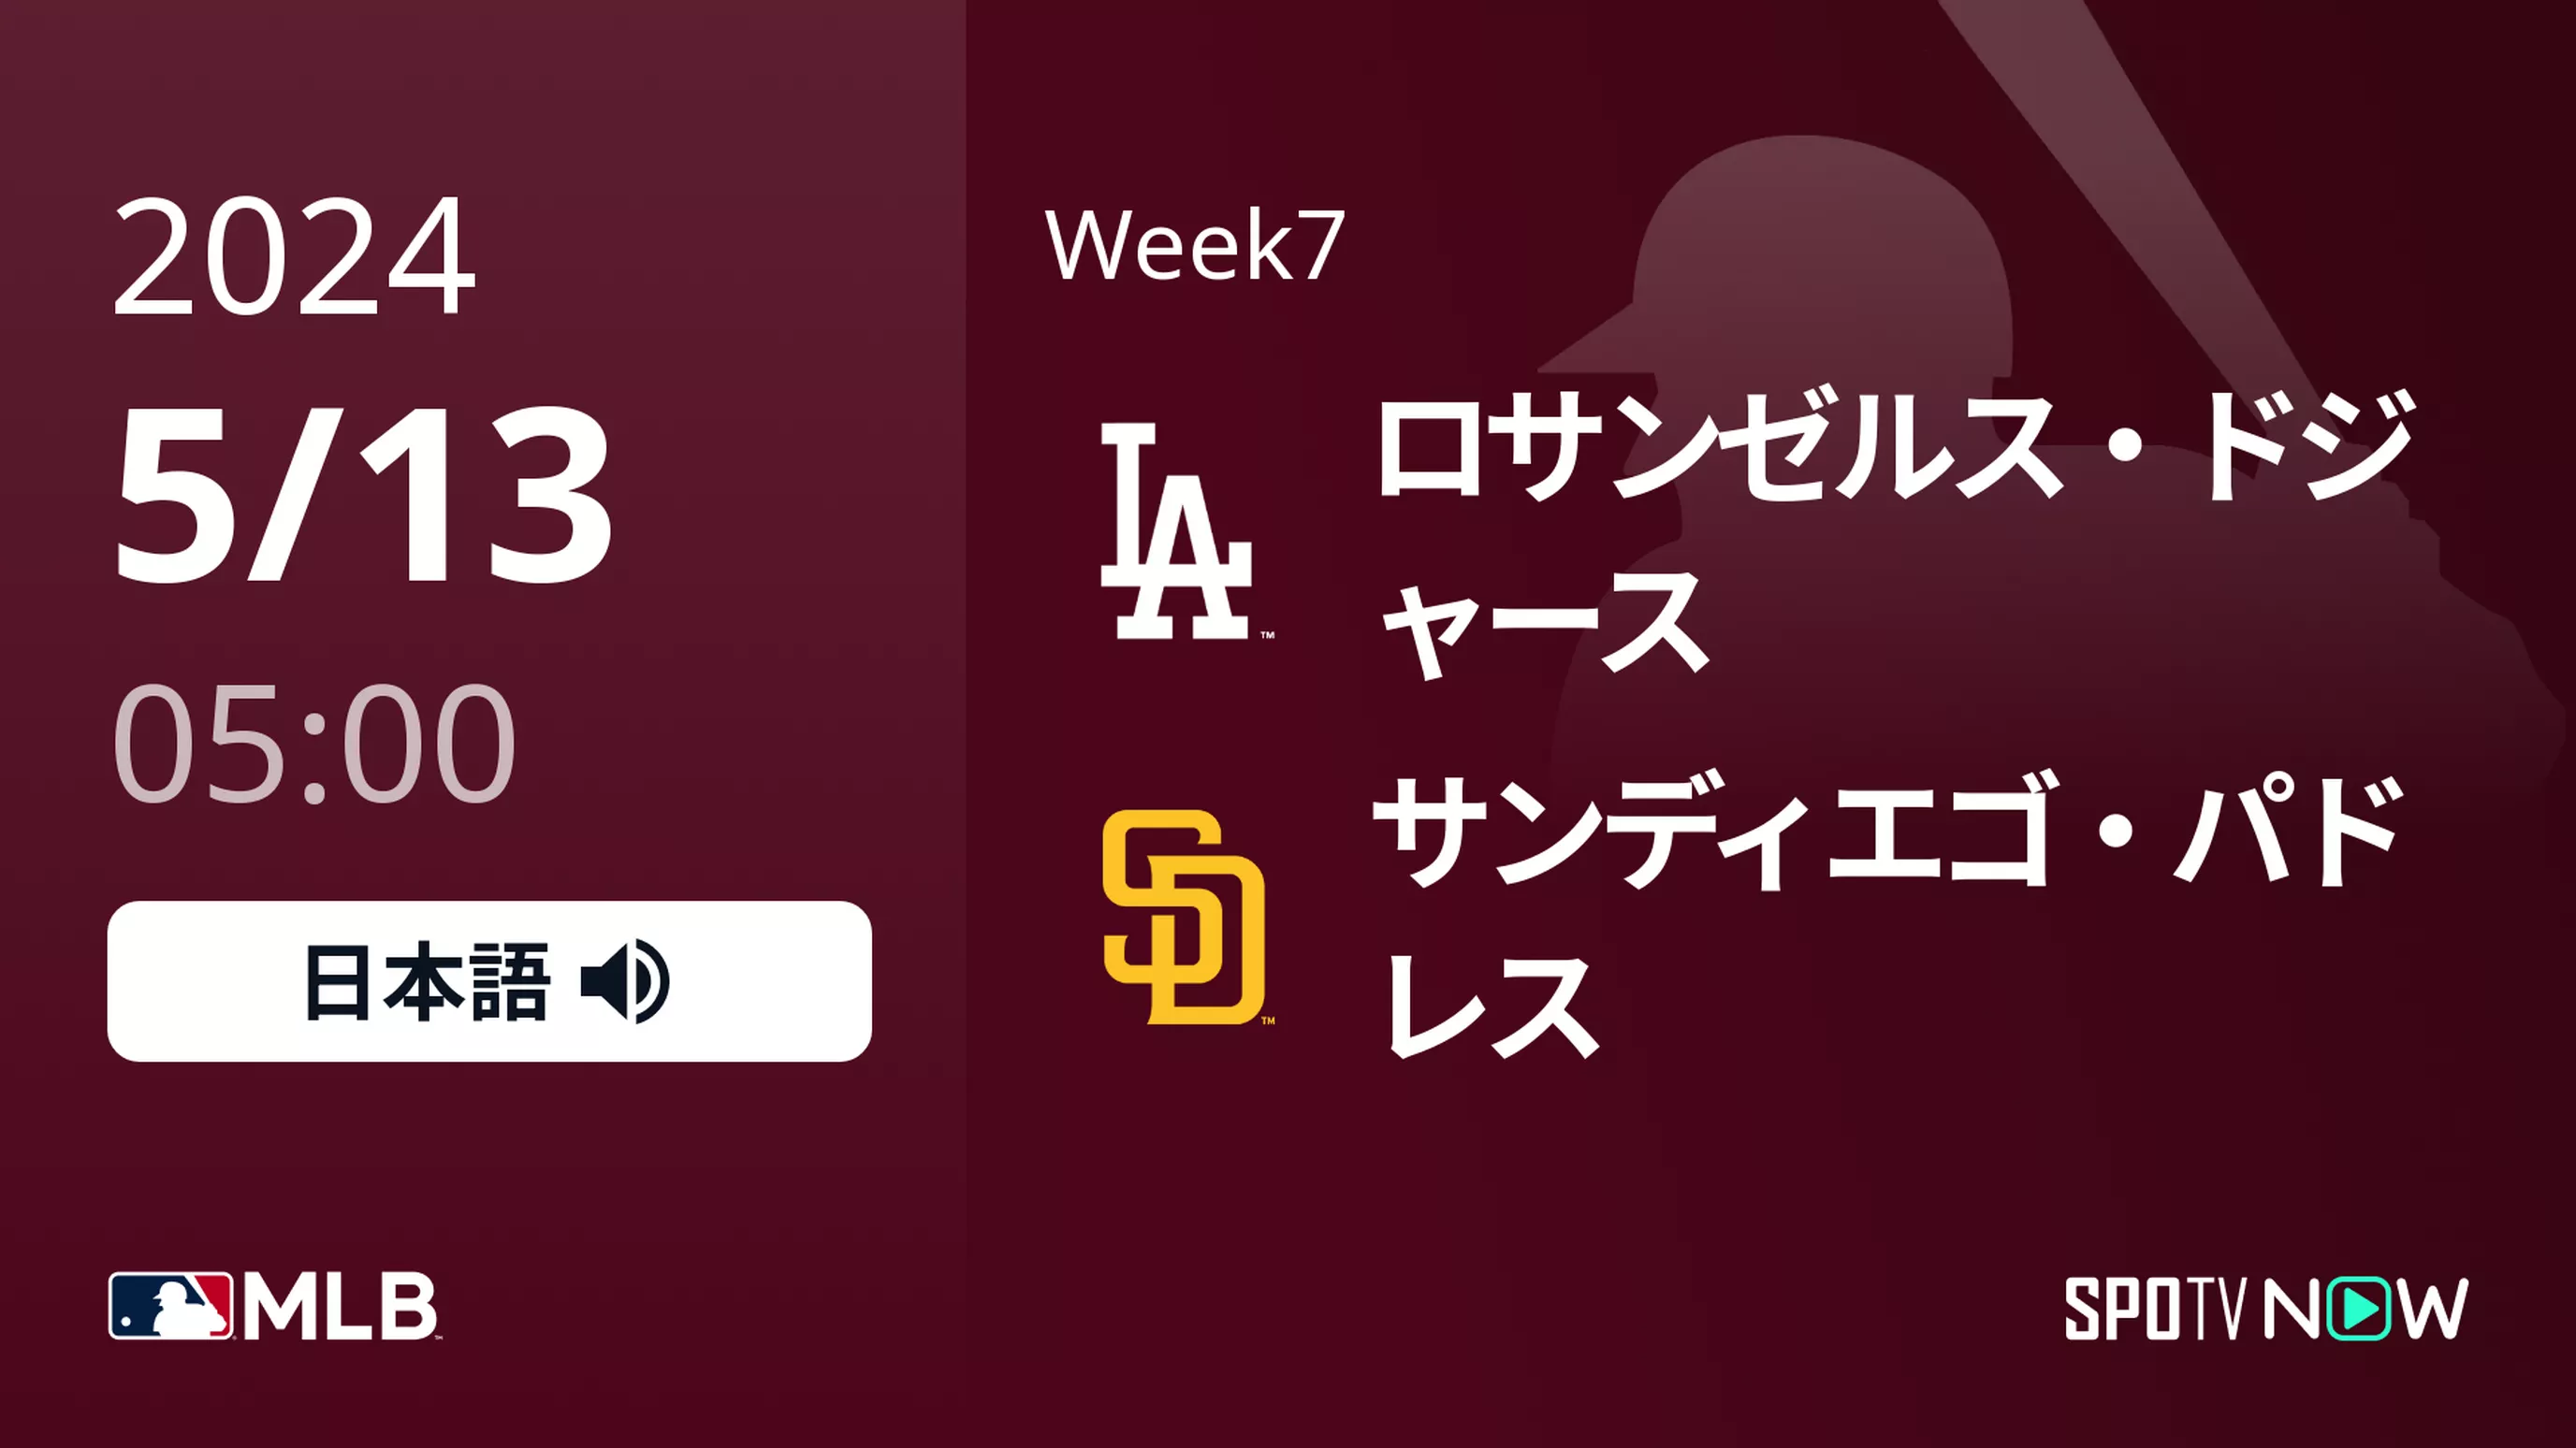 Week7 ドジャース vs パドレス 5/13[MLB]